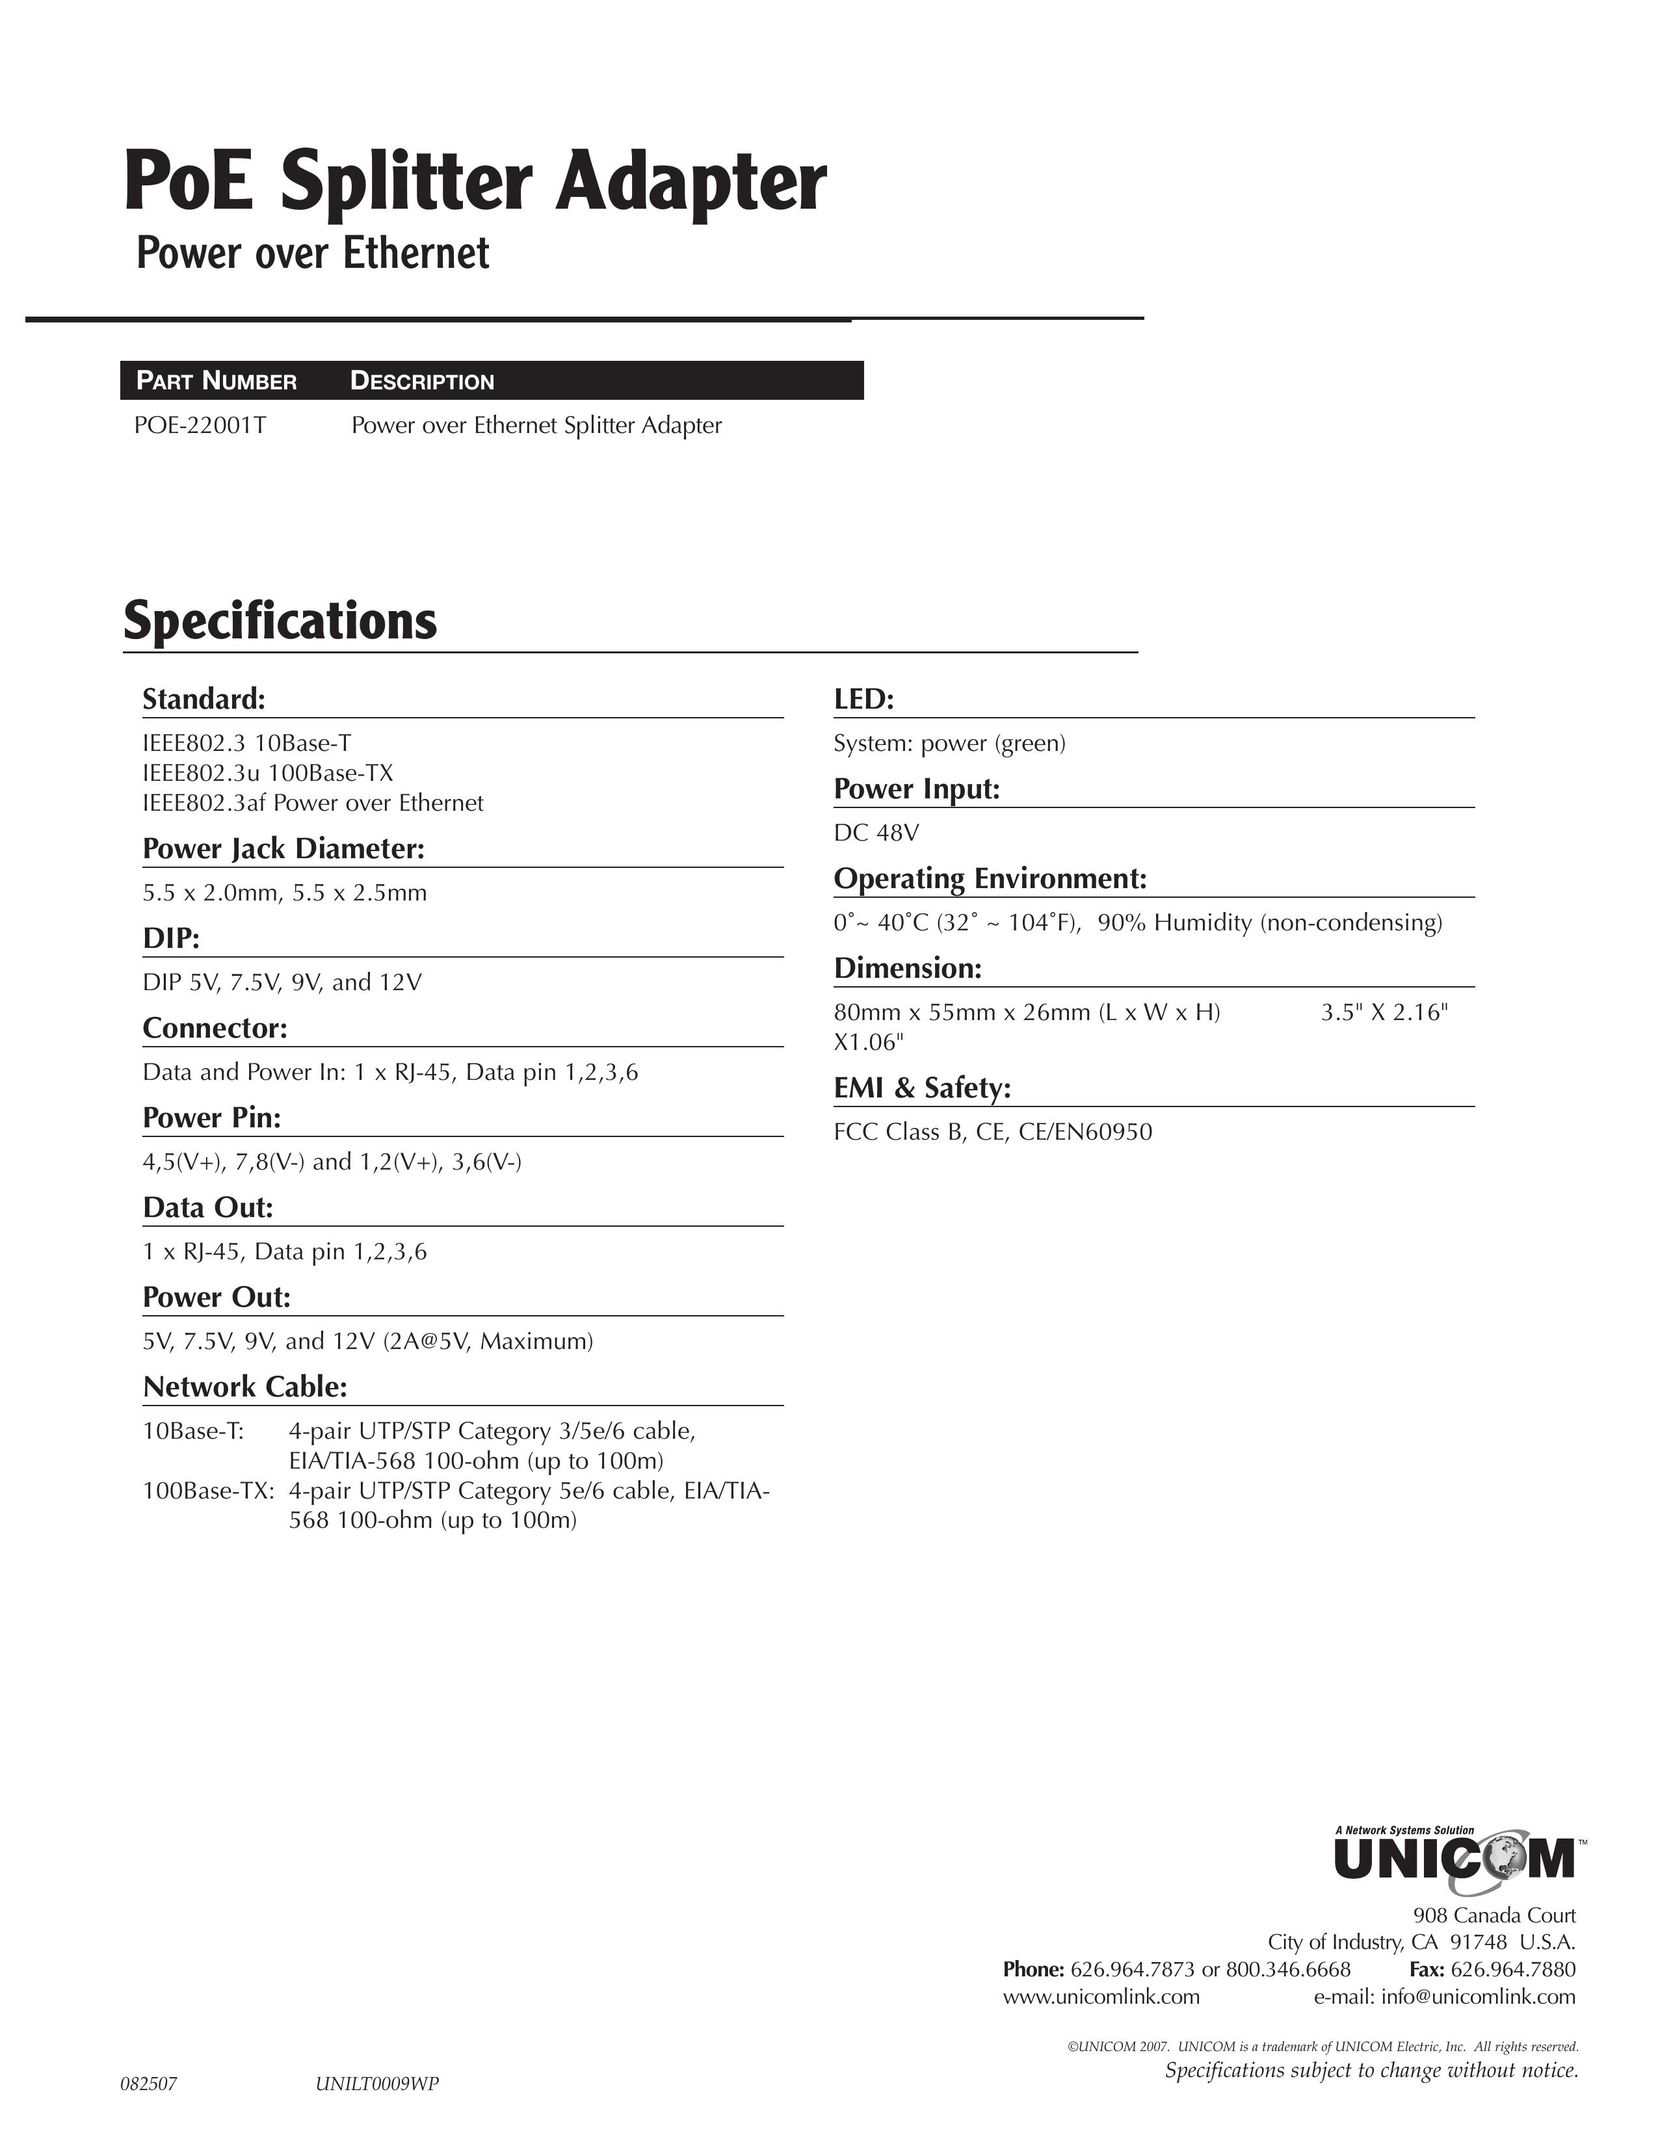 UNICOM Electric POE-22001T Network Card User Manual